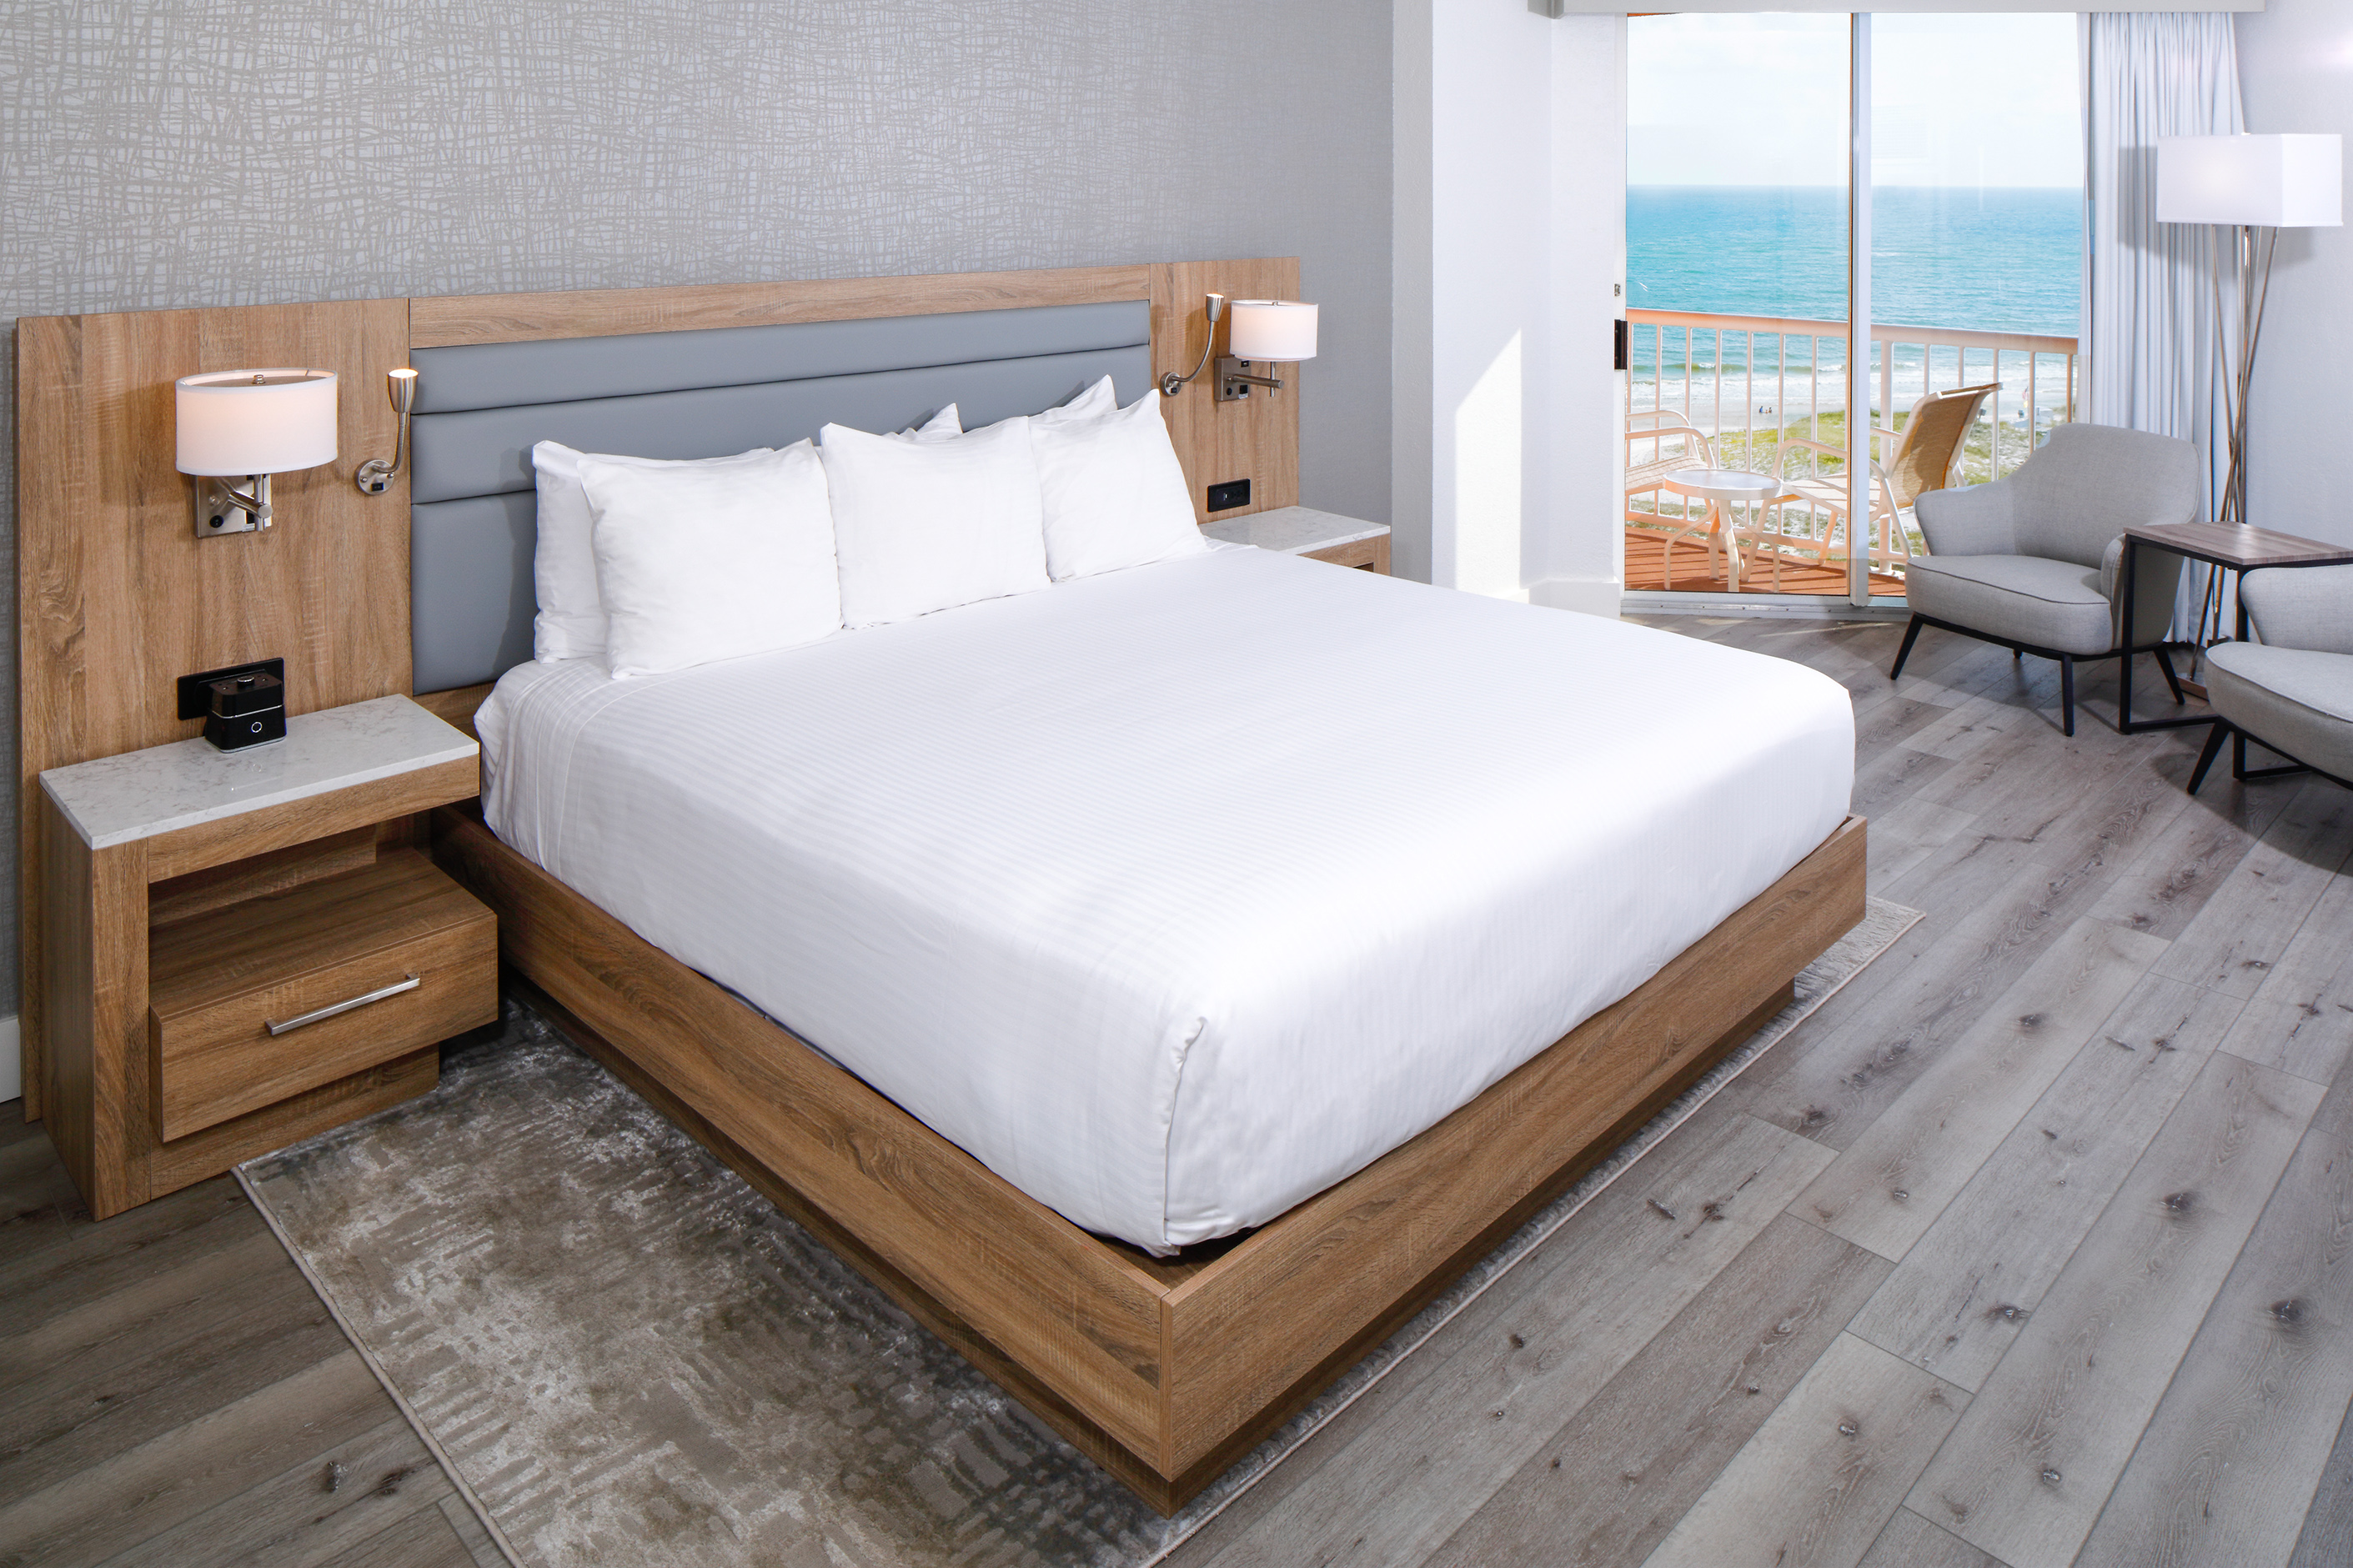 Perdido Beach Beach View Room featuring one king bed